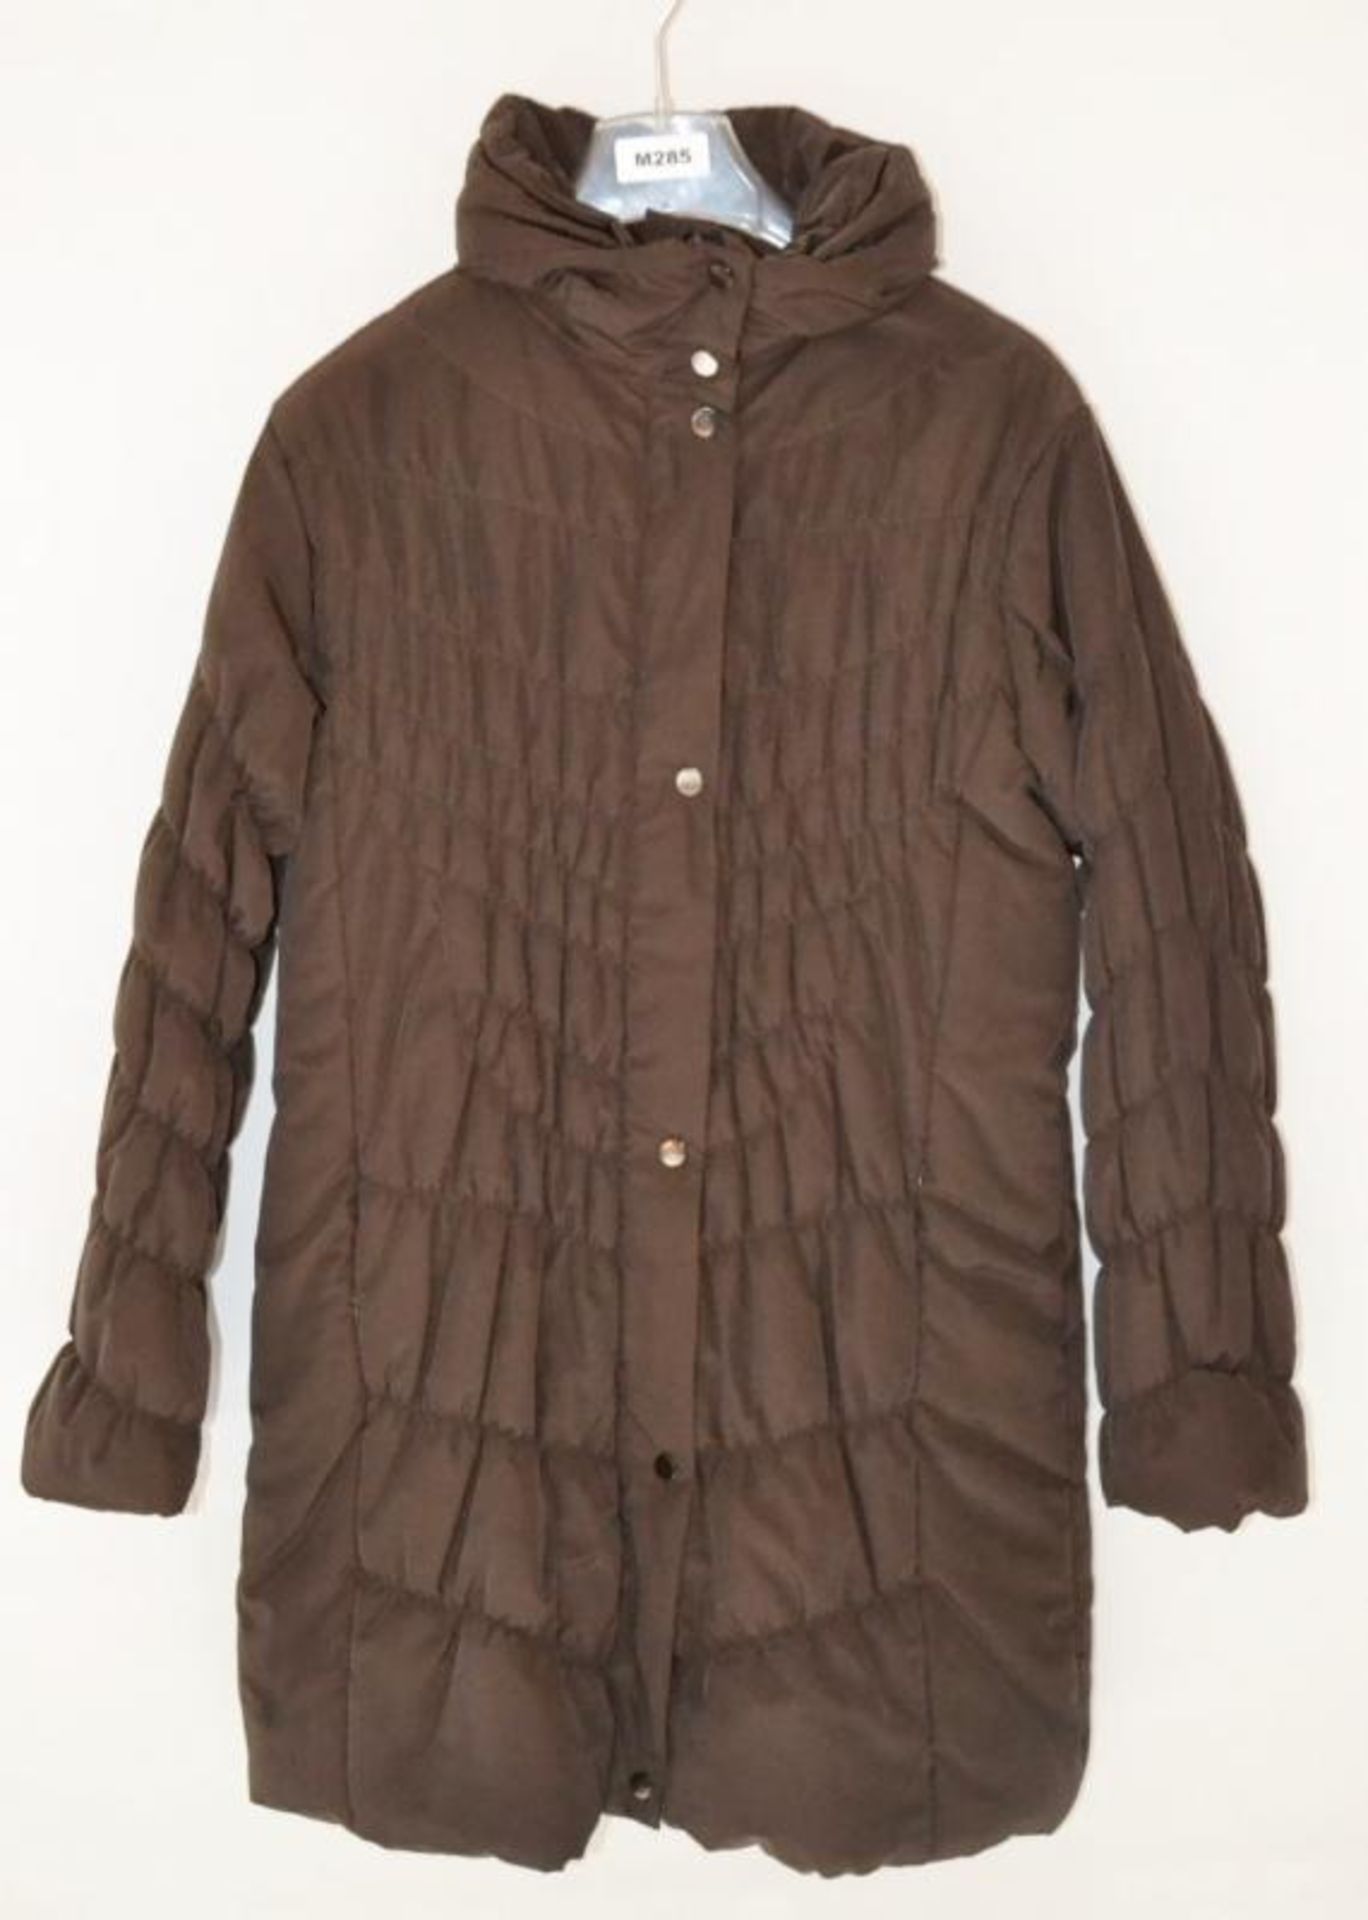 1 x Steilmann Womens Padded Winter Coat In A Rich Brown Moleskin-style Fabric - UK Size 12 - New Sam